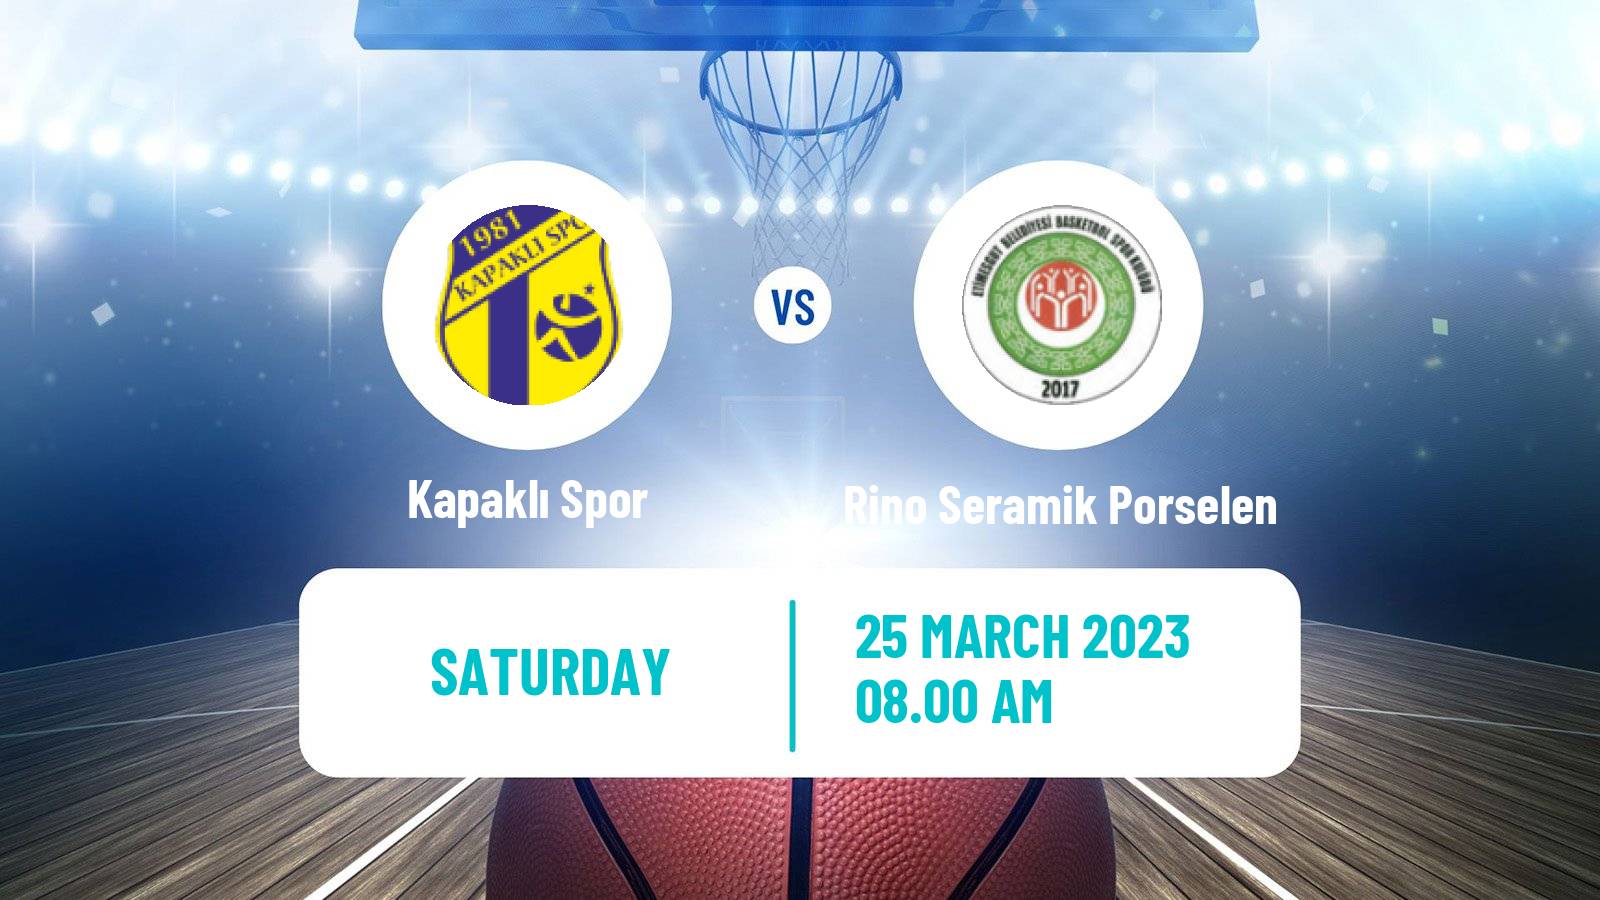 Basketball Turkish TB2L Kapaklı Spor - Rino Seramik Porselen